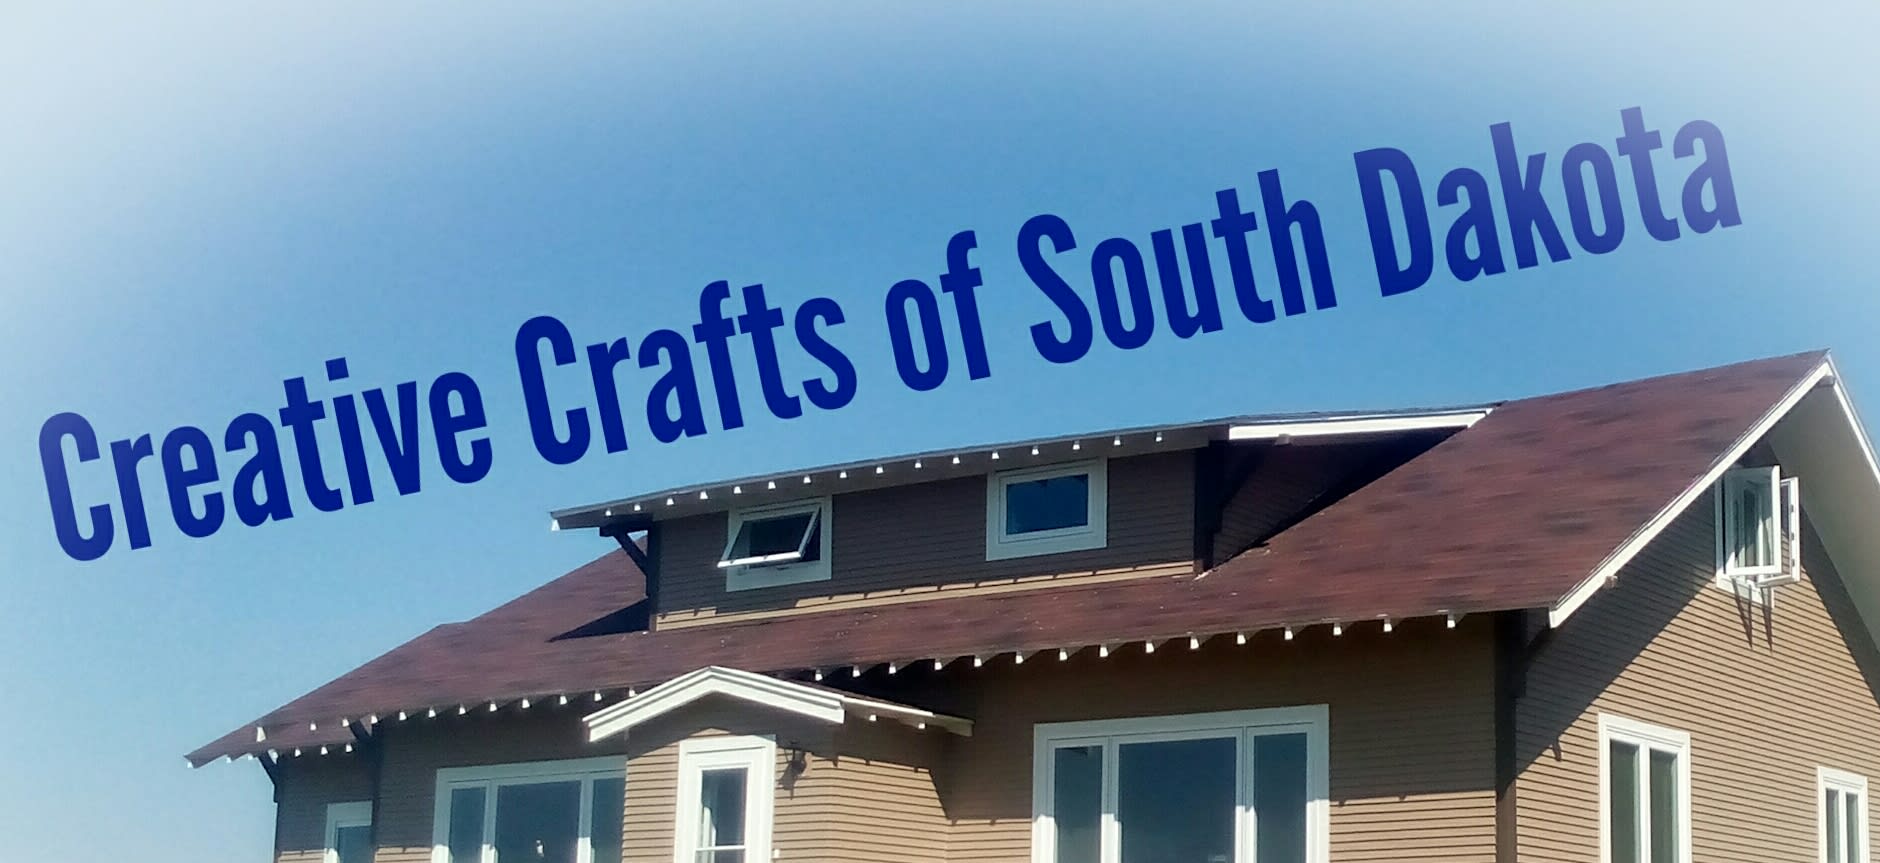 Creative Crafts Of South Dakota